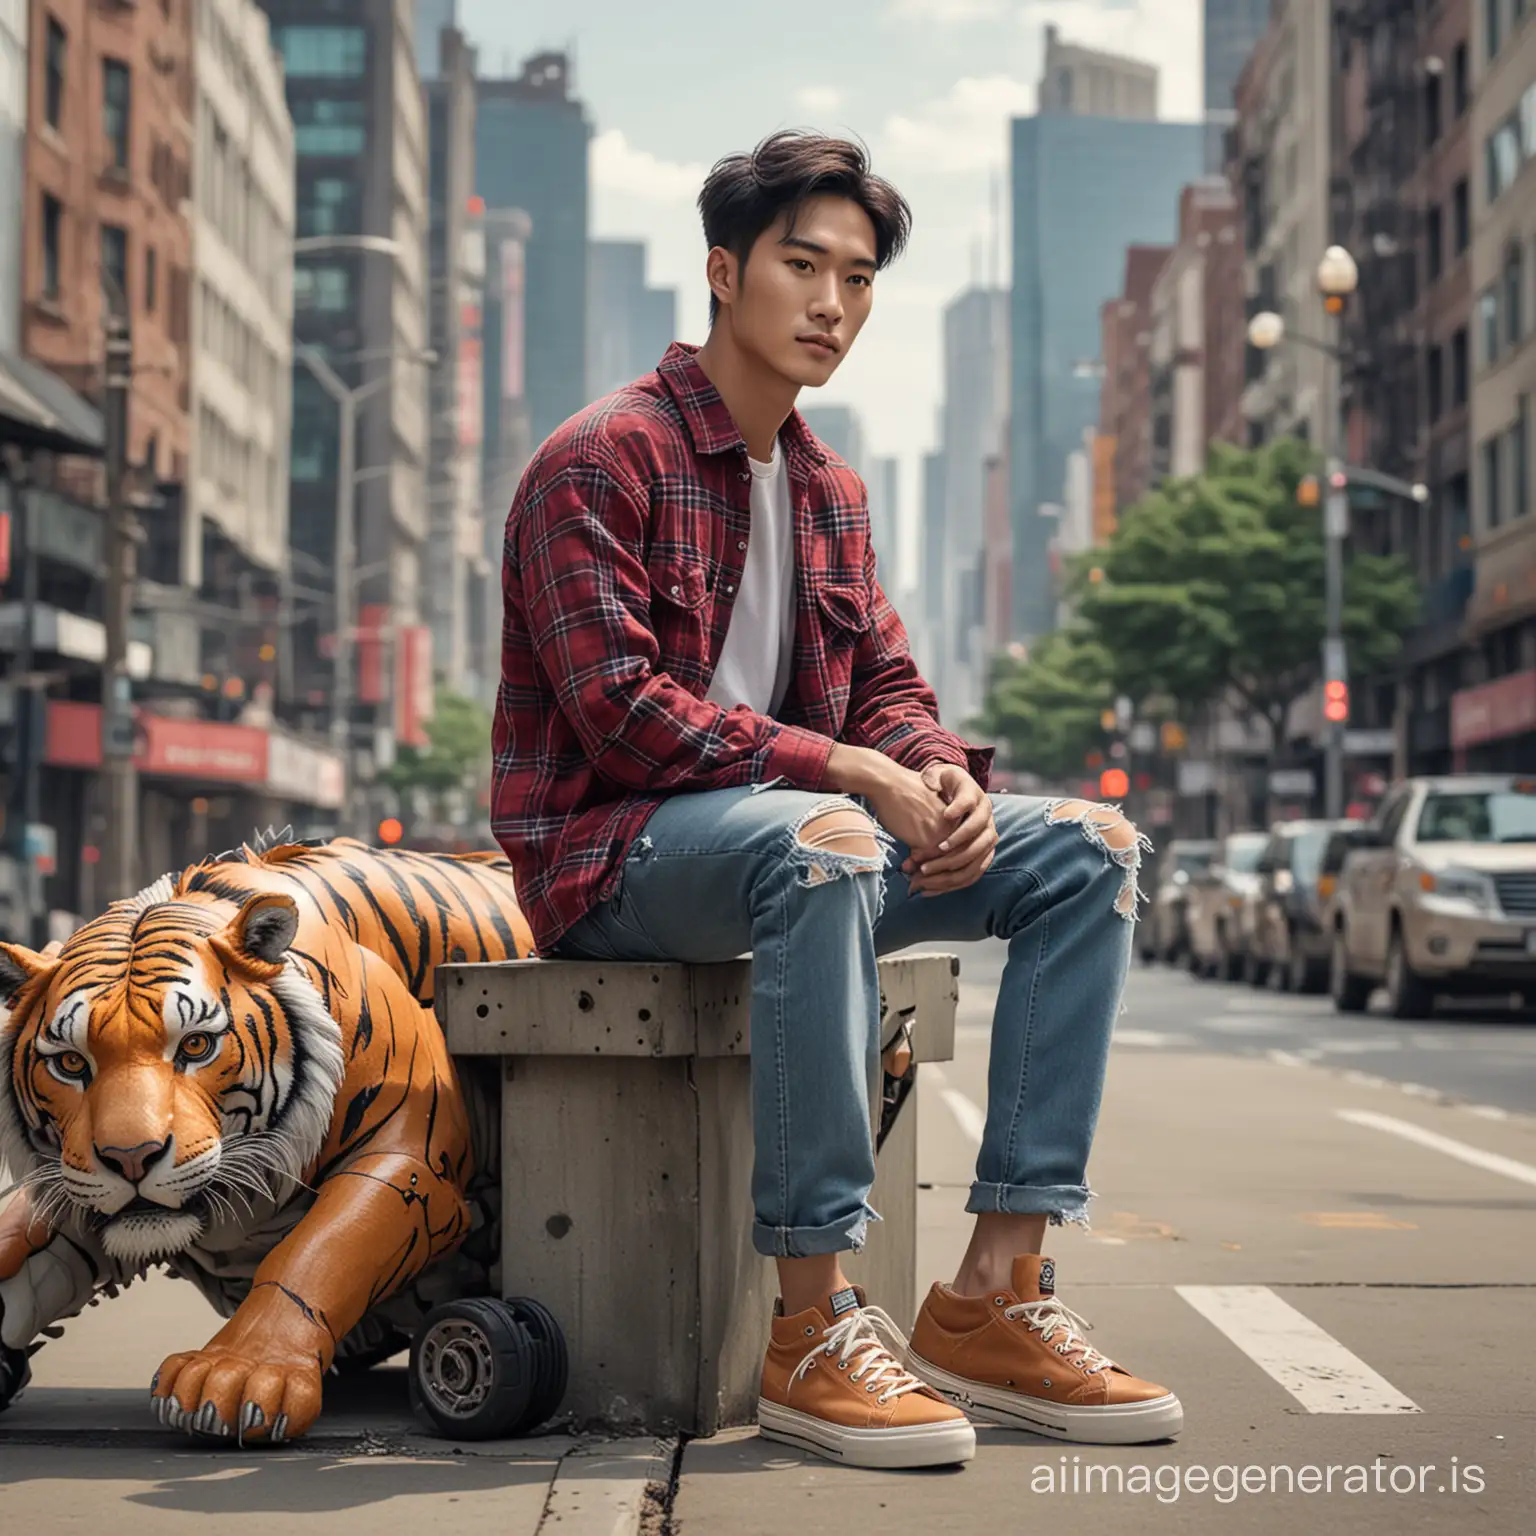 Stylish-Korean-Man-Riding-Tiger-Robot-in-Urban-Landscape